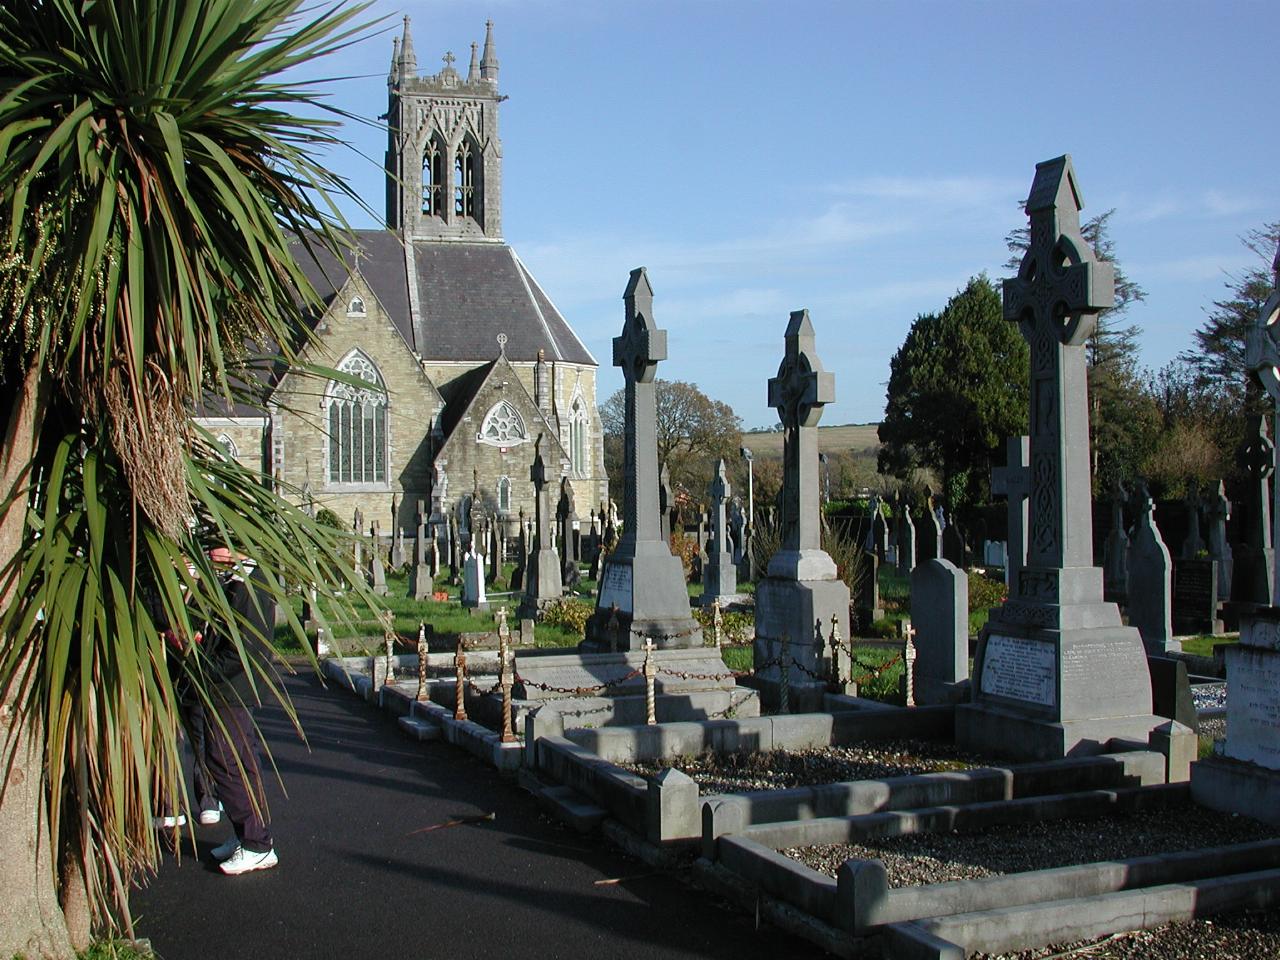 Cemetery at St. Patrick's Church, Bandon